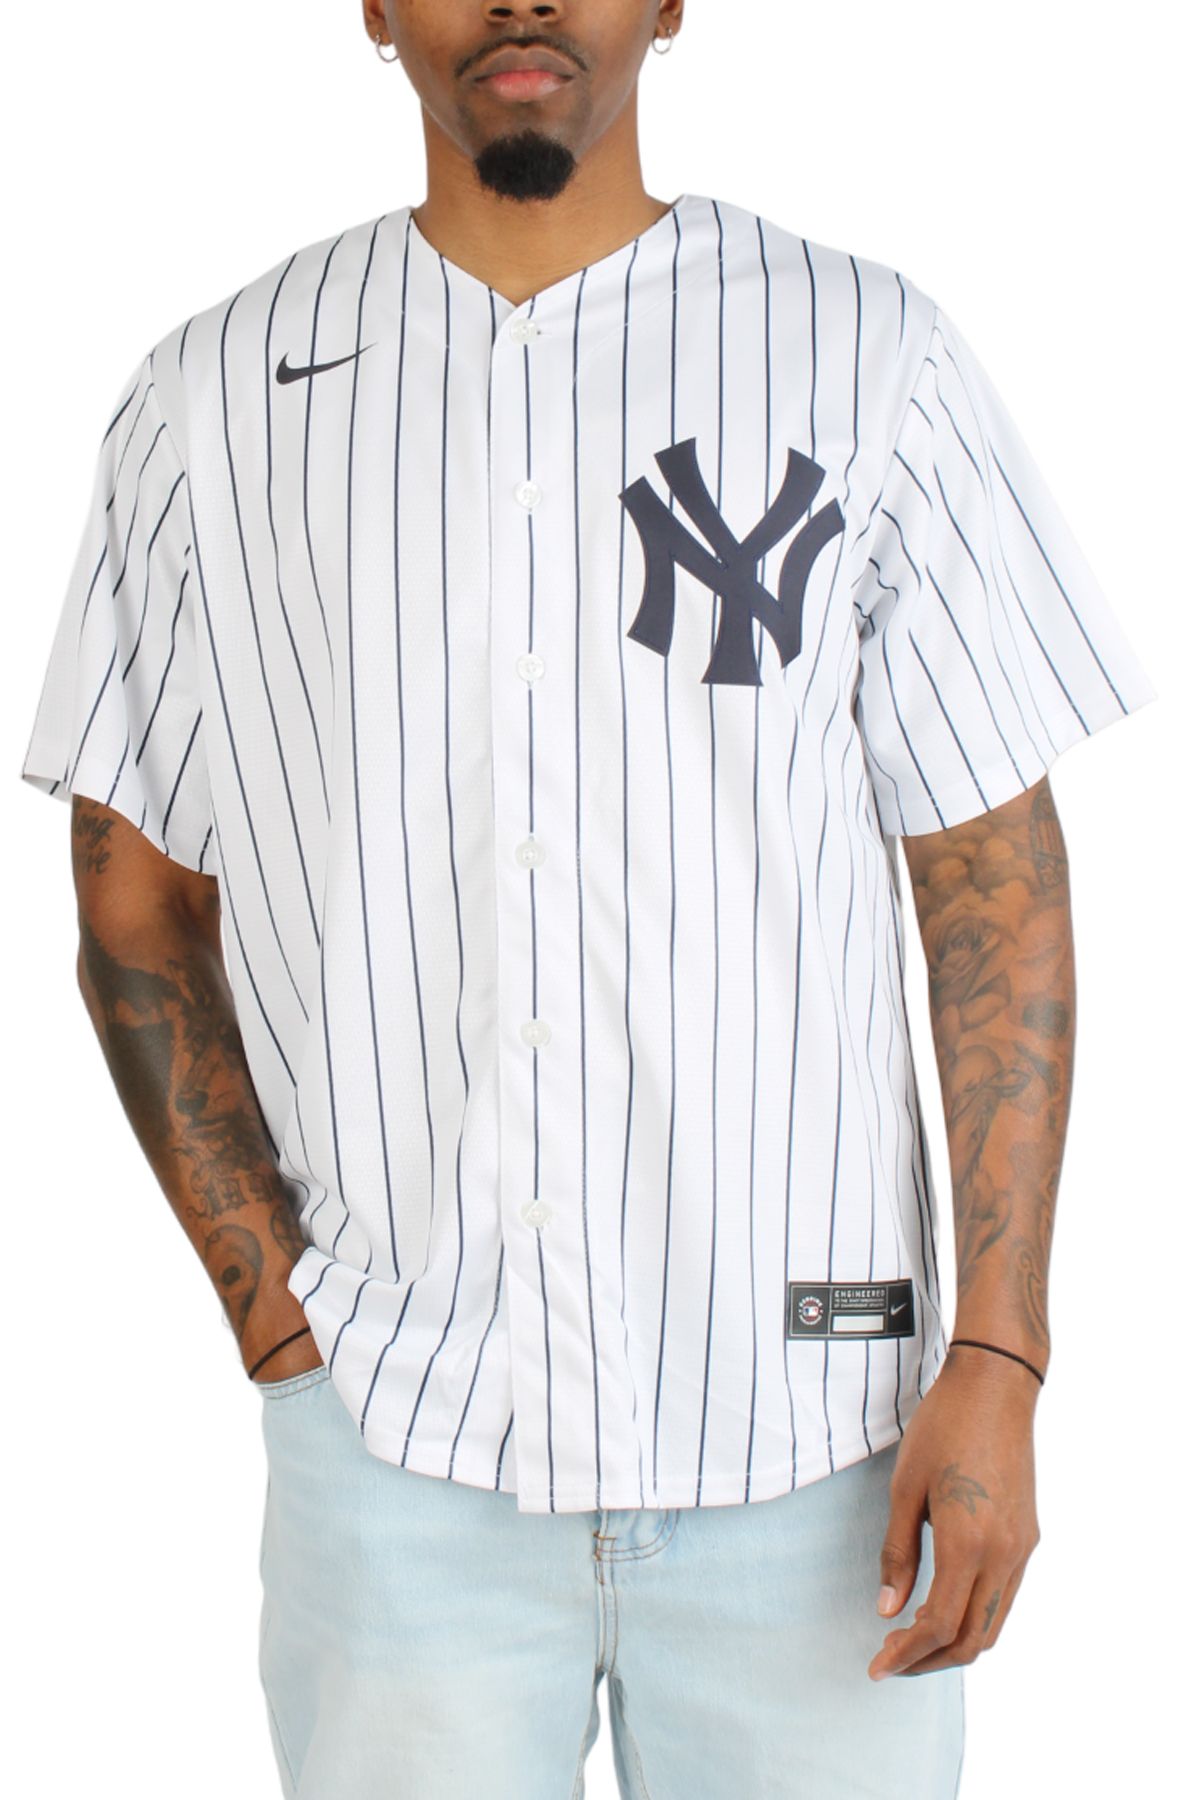 new york baseball jersey cheap